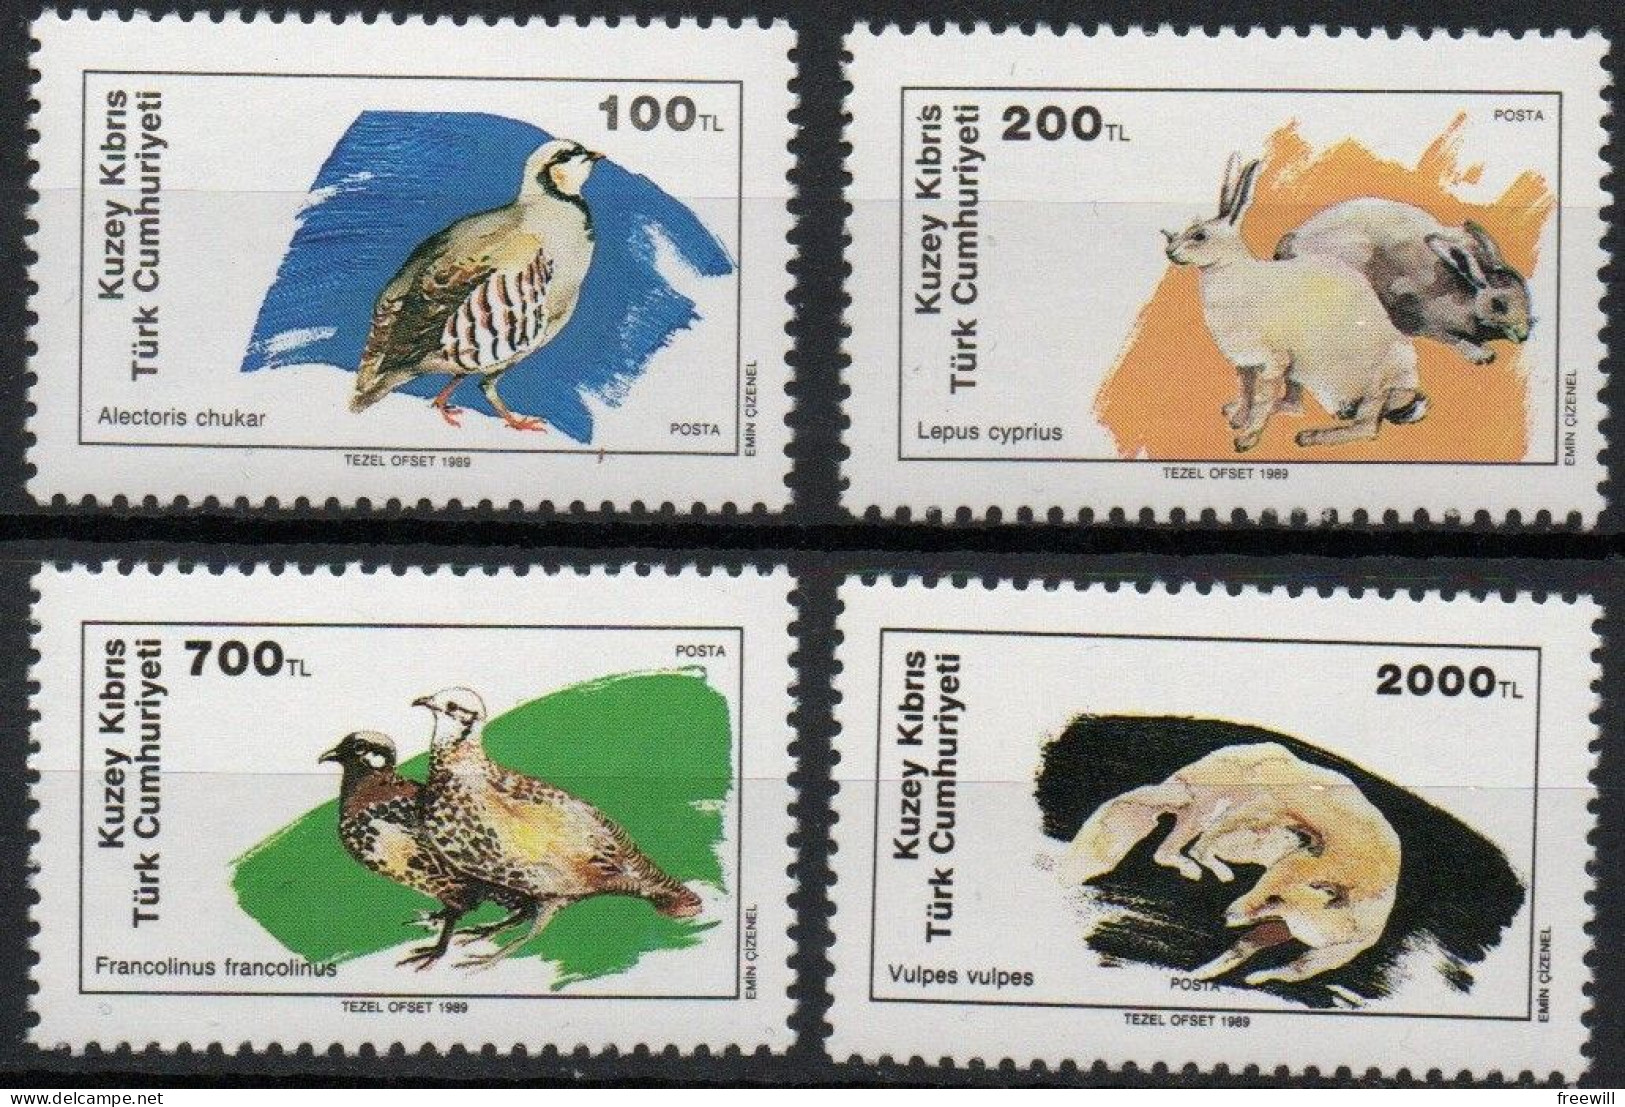 Chypre turque -Turkish Cyprus  Timbres divers - Various stamps -Verschillende postzegels XXX